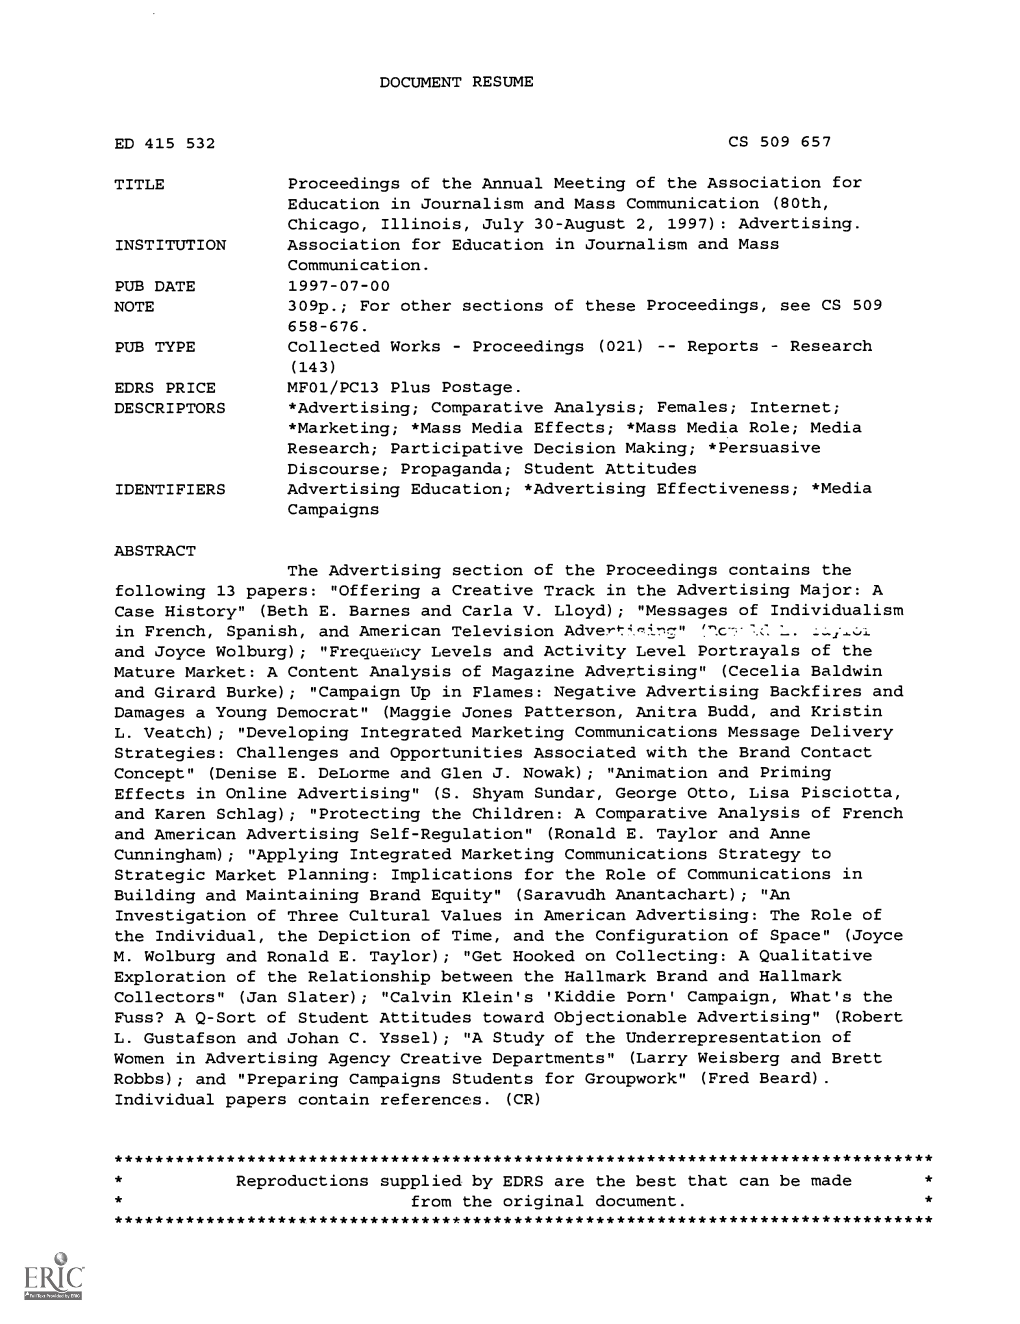 DOCUMENT RESUME CS 509 657 Proceedings of the Annual Meeting